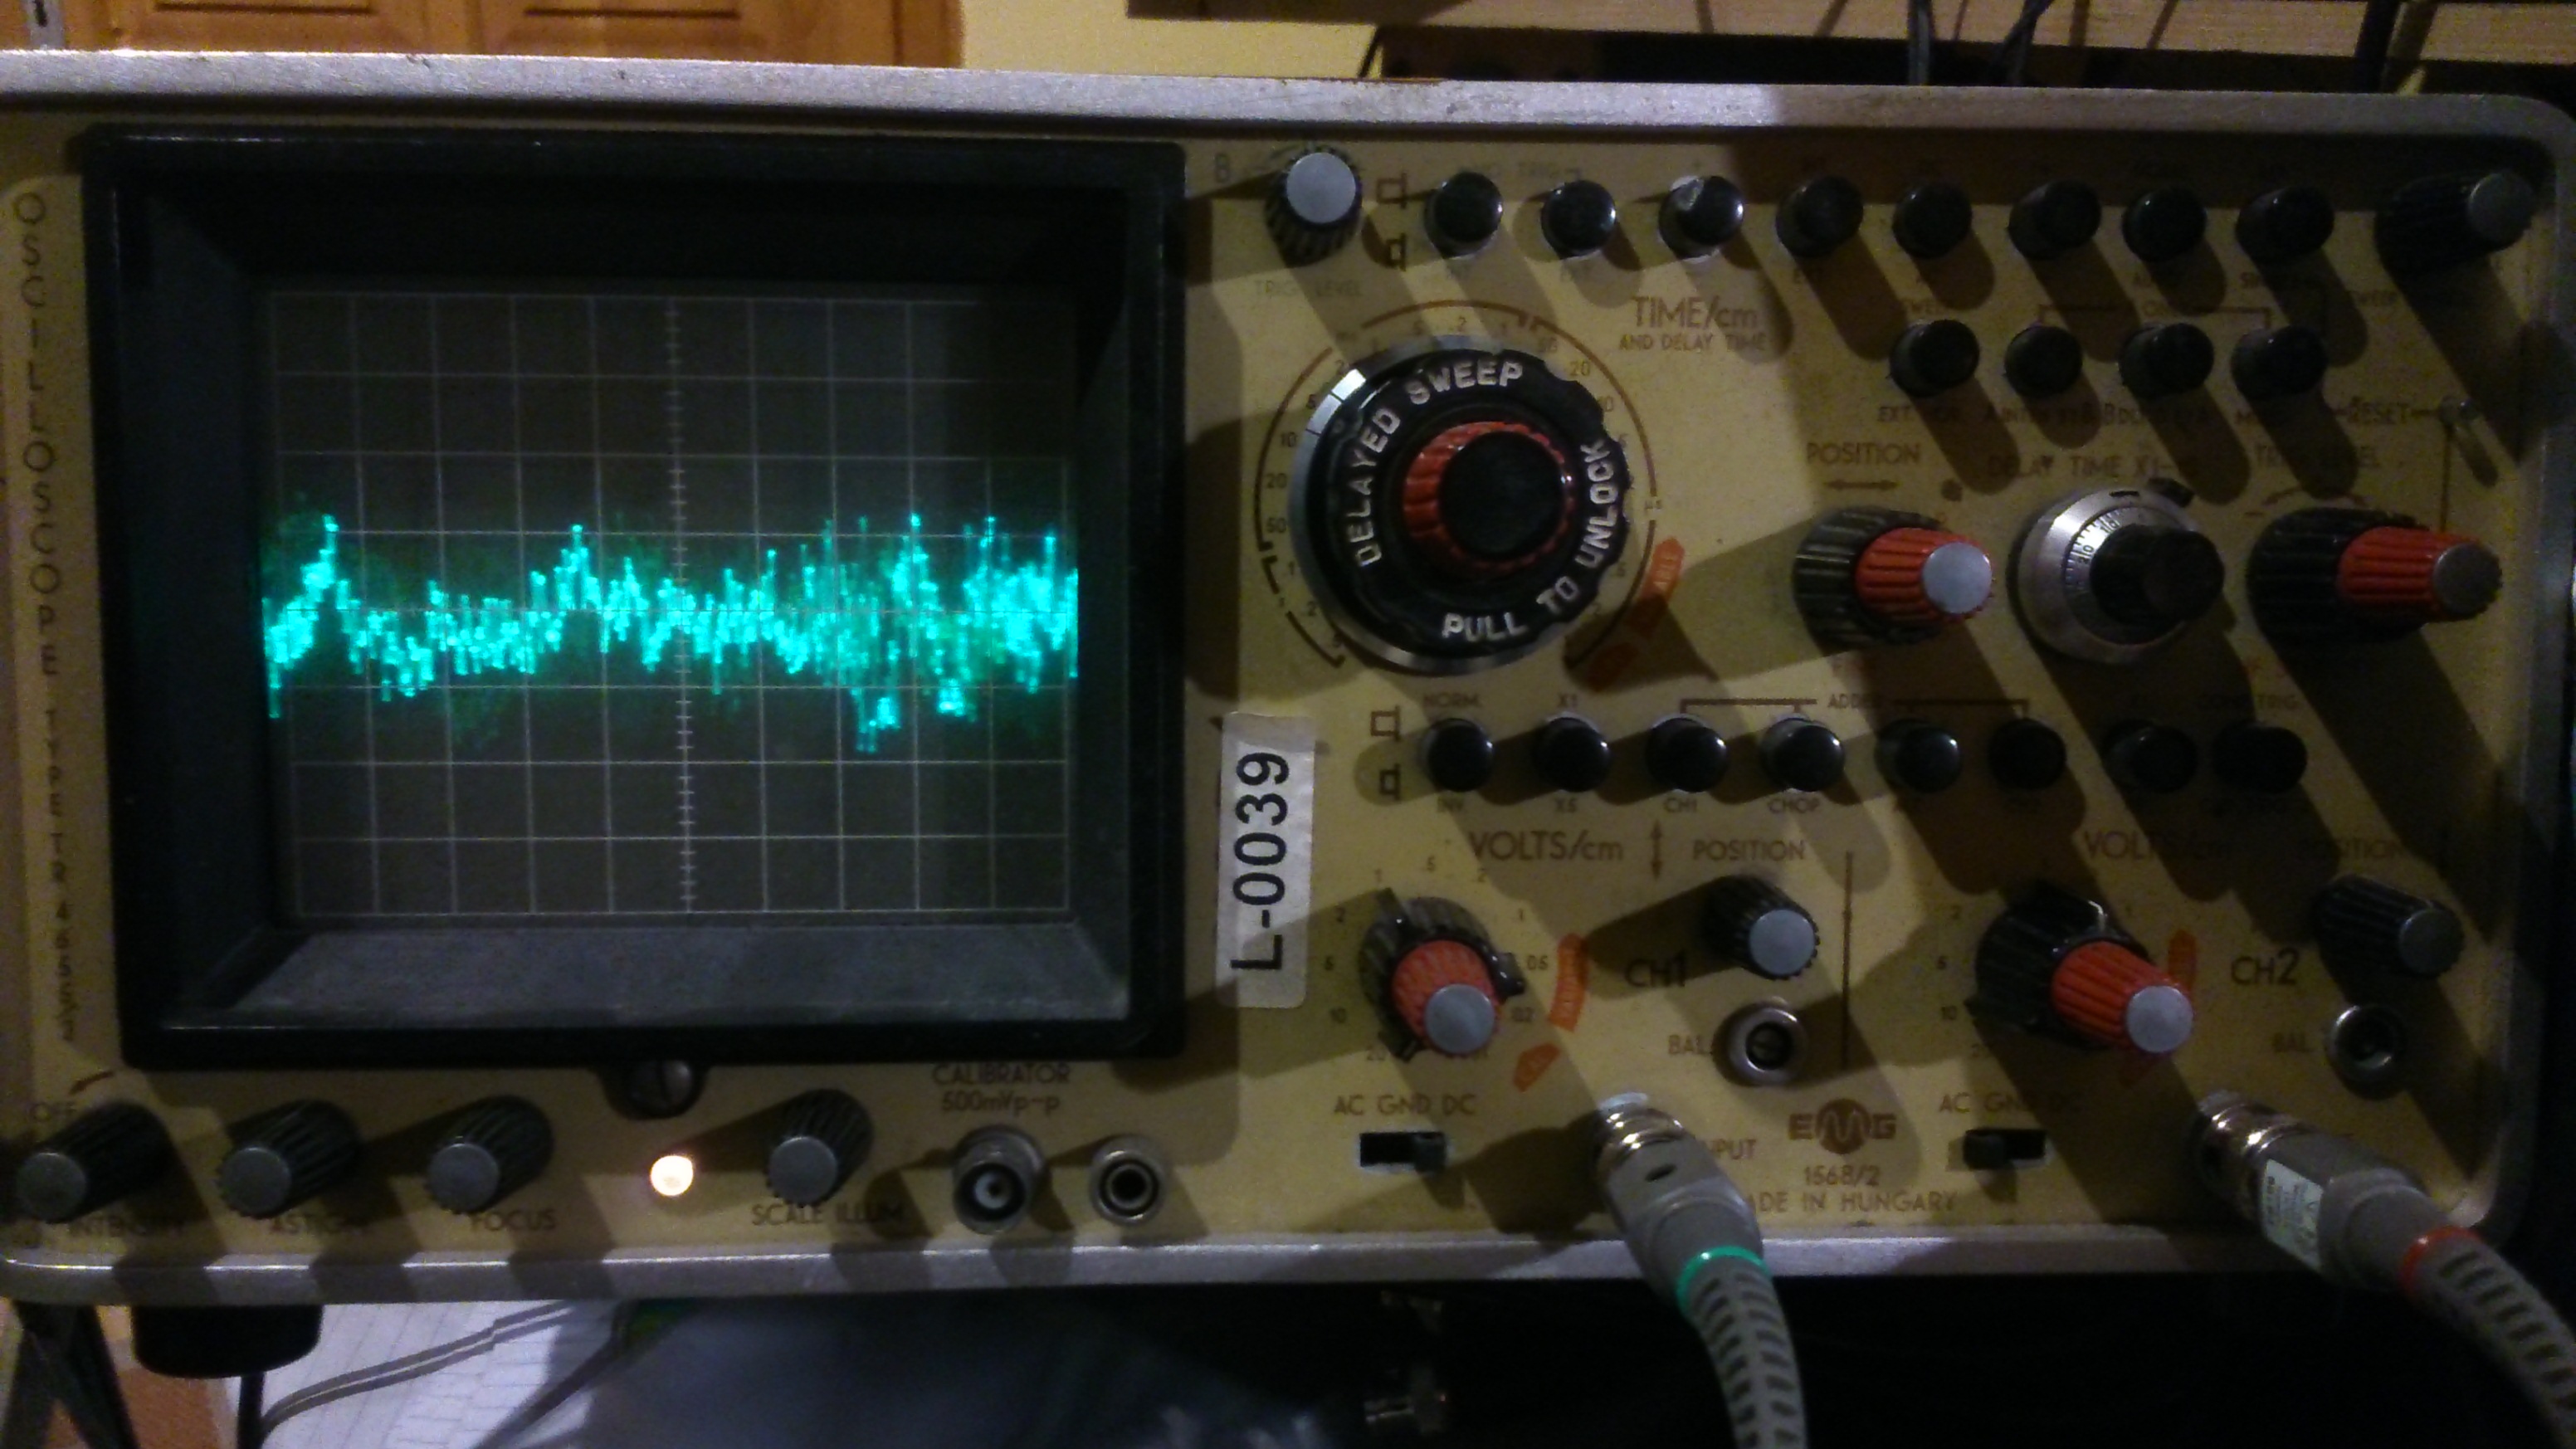 EMG 1568/2 oscilloscope